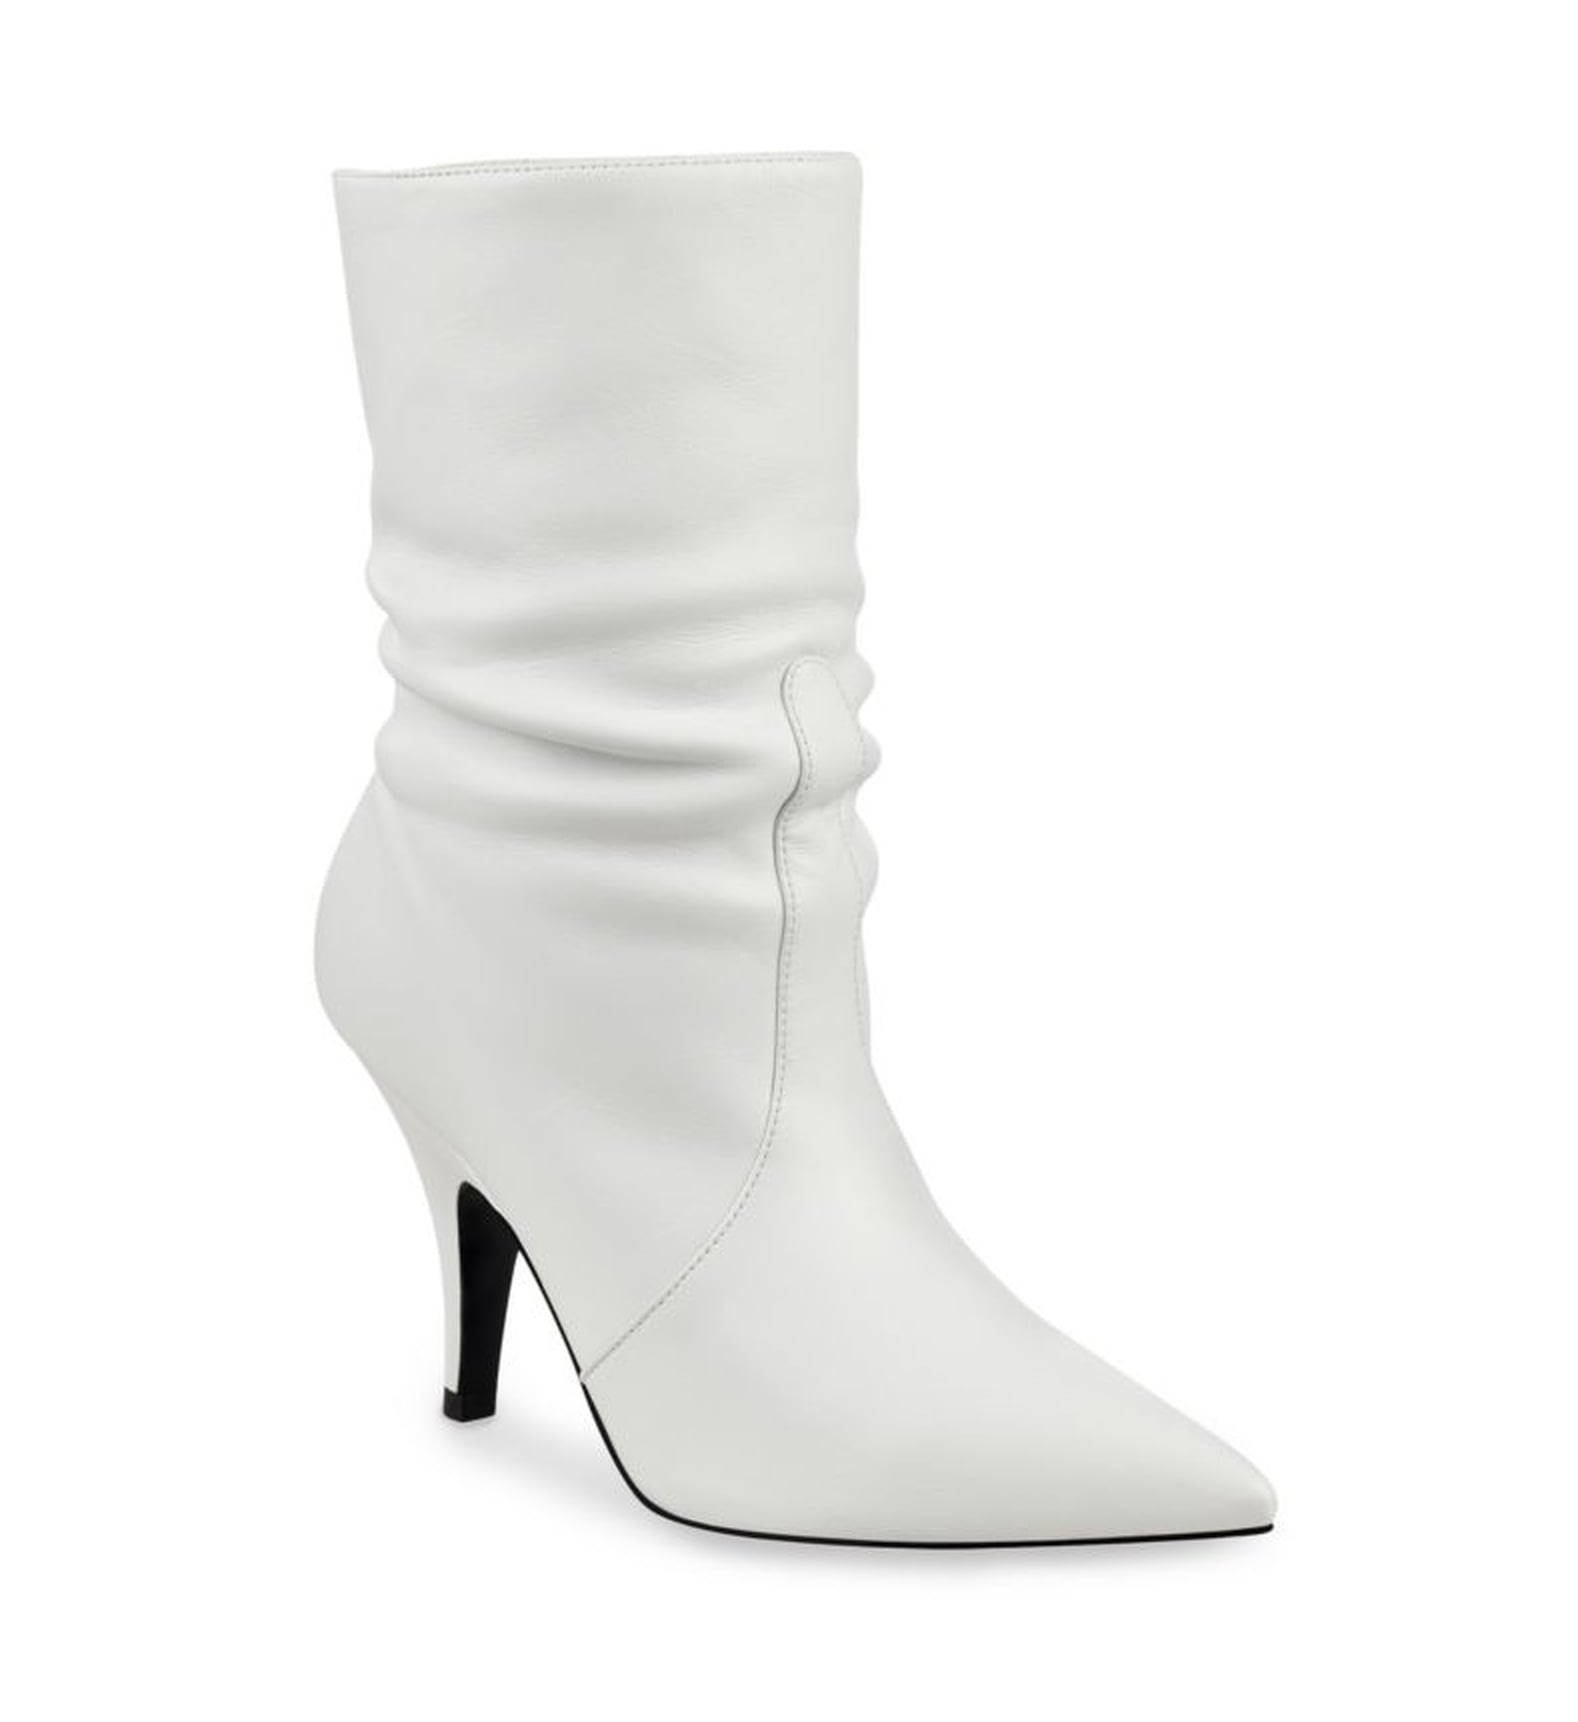 Rihanna's White Off White x Jimmy Choo Boots | POPSUGAR Fashion